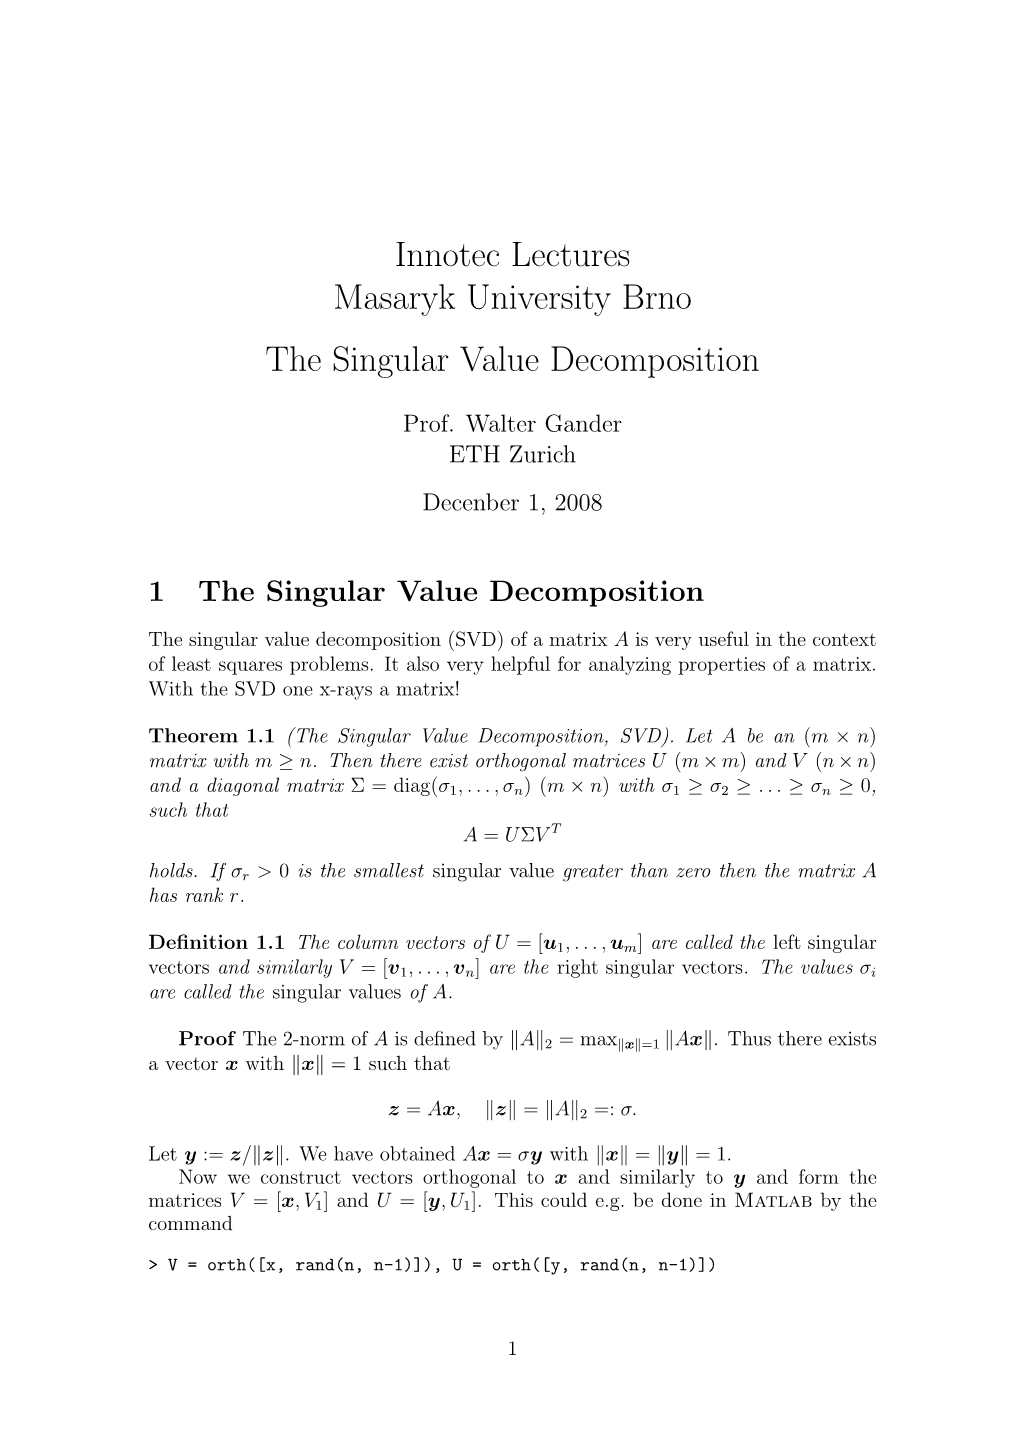 1 the Singular Value Decomposition